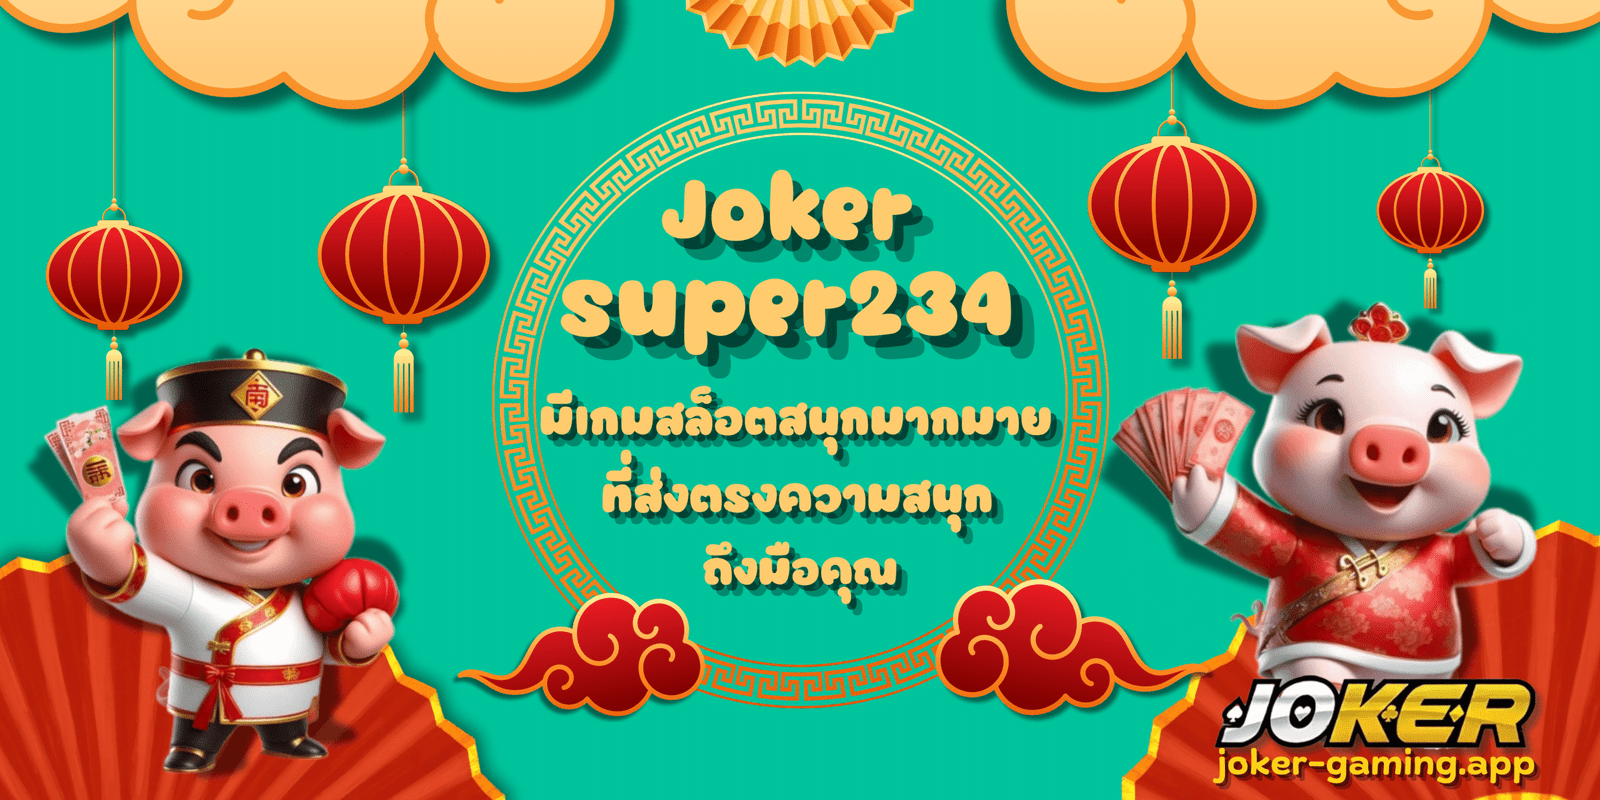 Joker-super234-สมัครสมาชิก